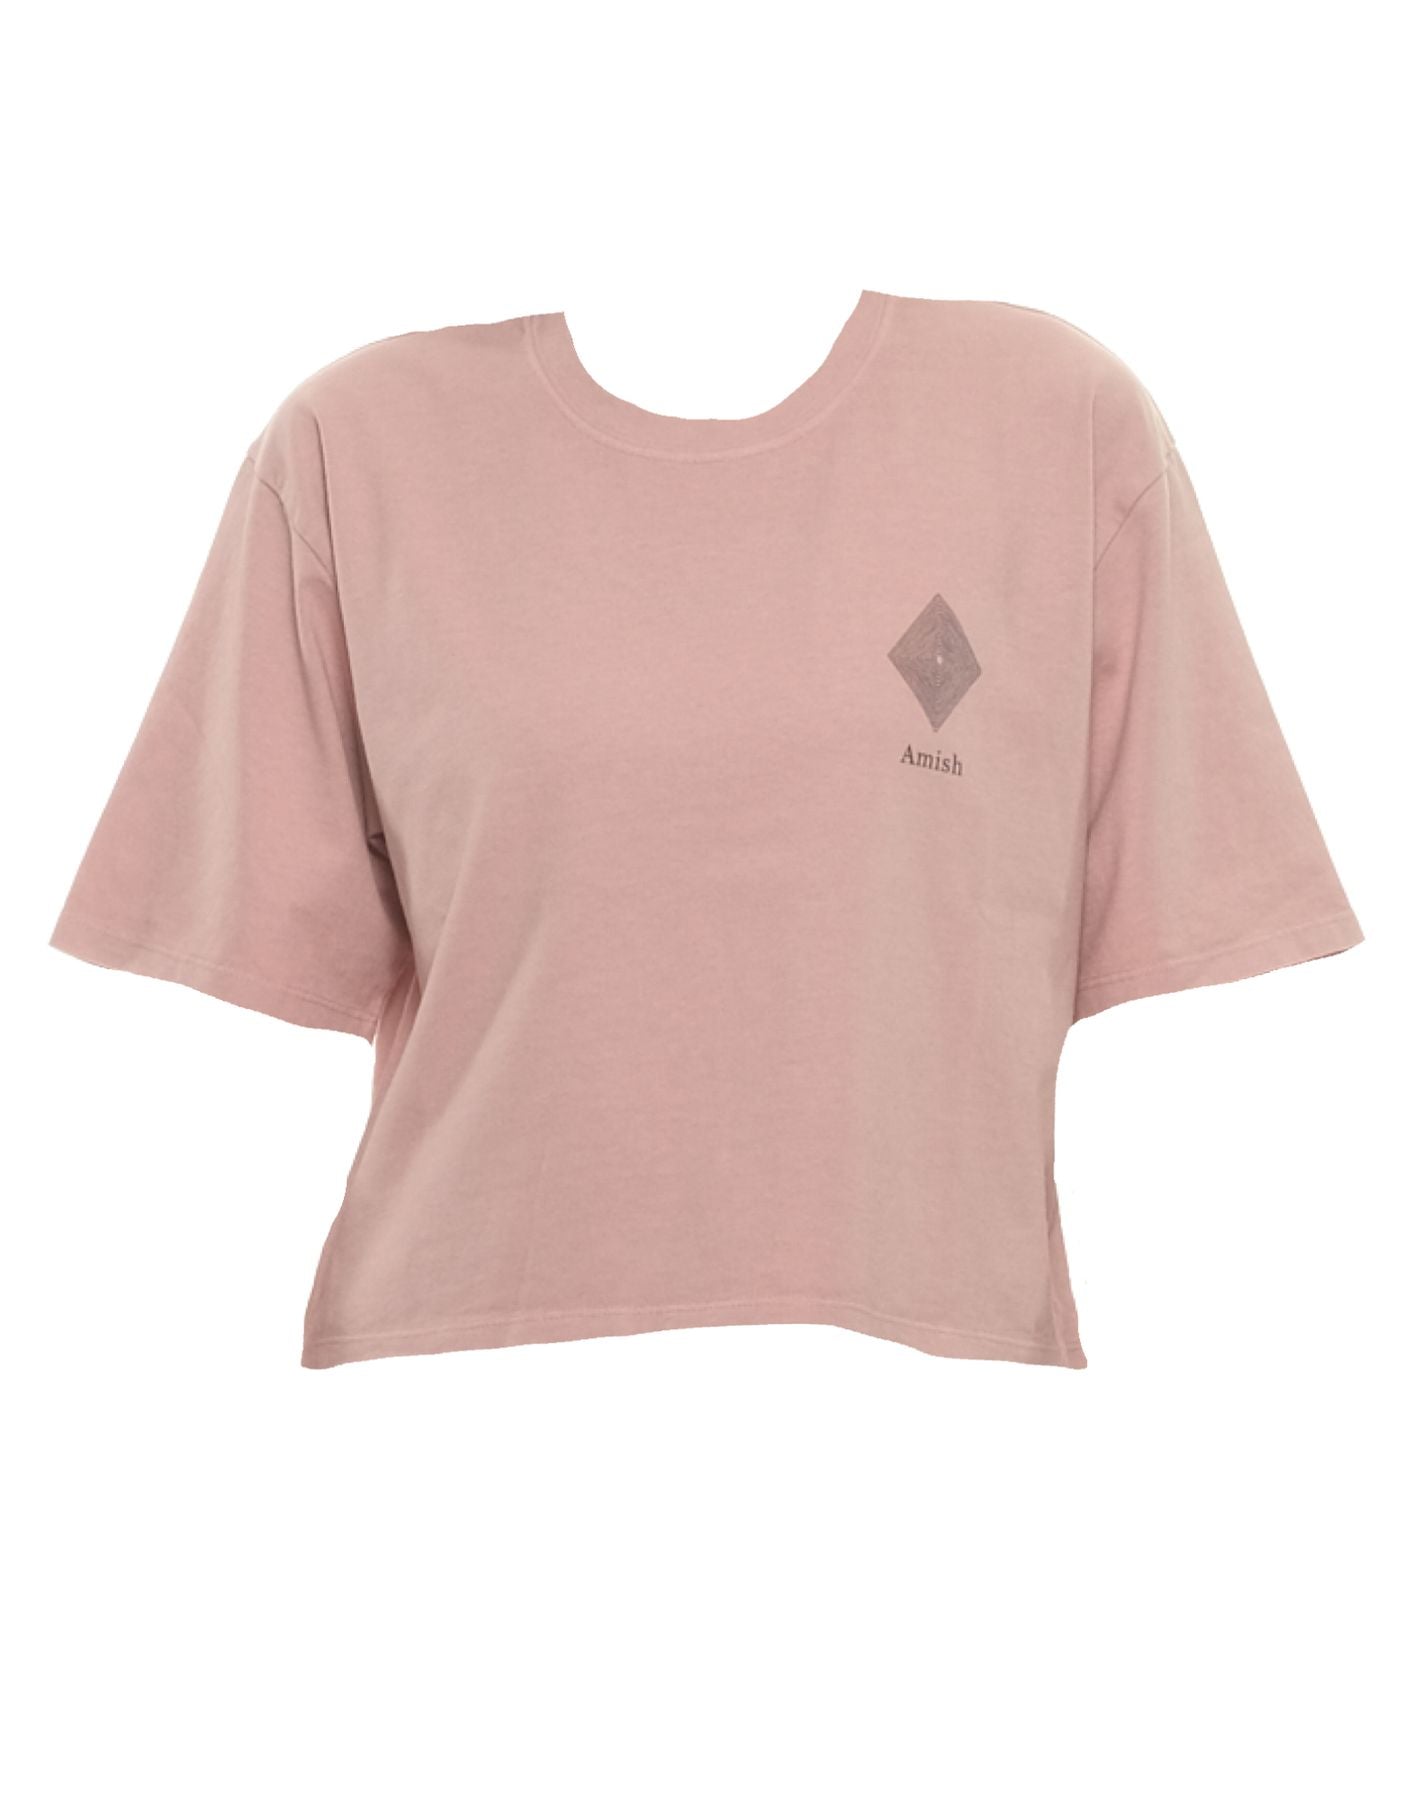 Camiseta para mujer amd093cg45xxxx gris rosa Amish